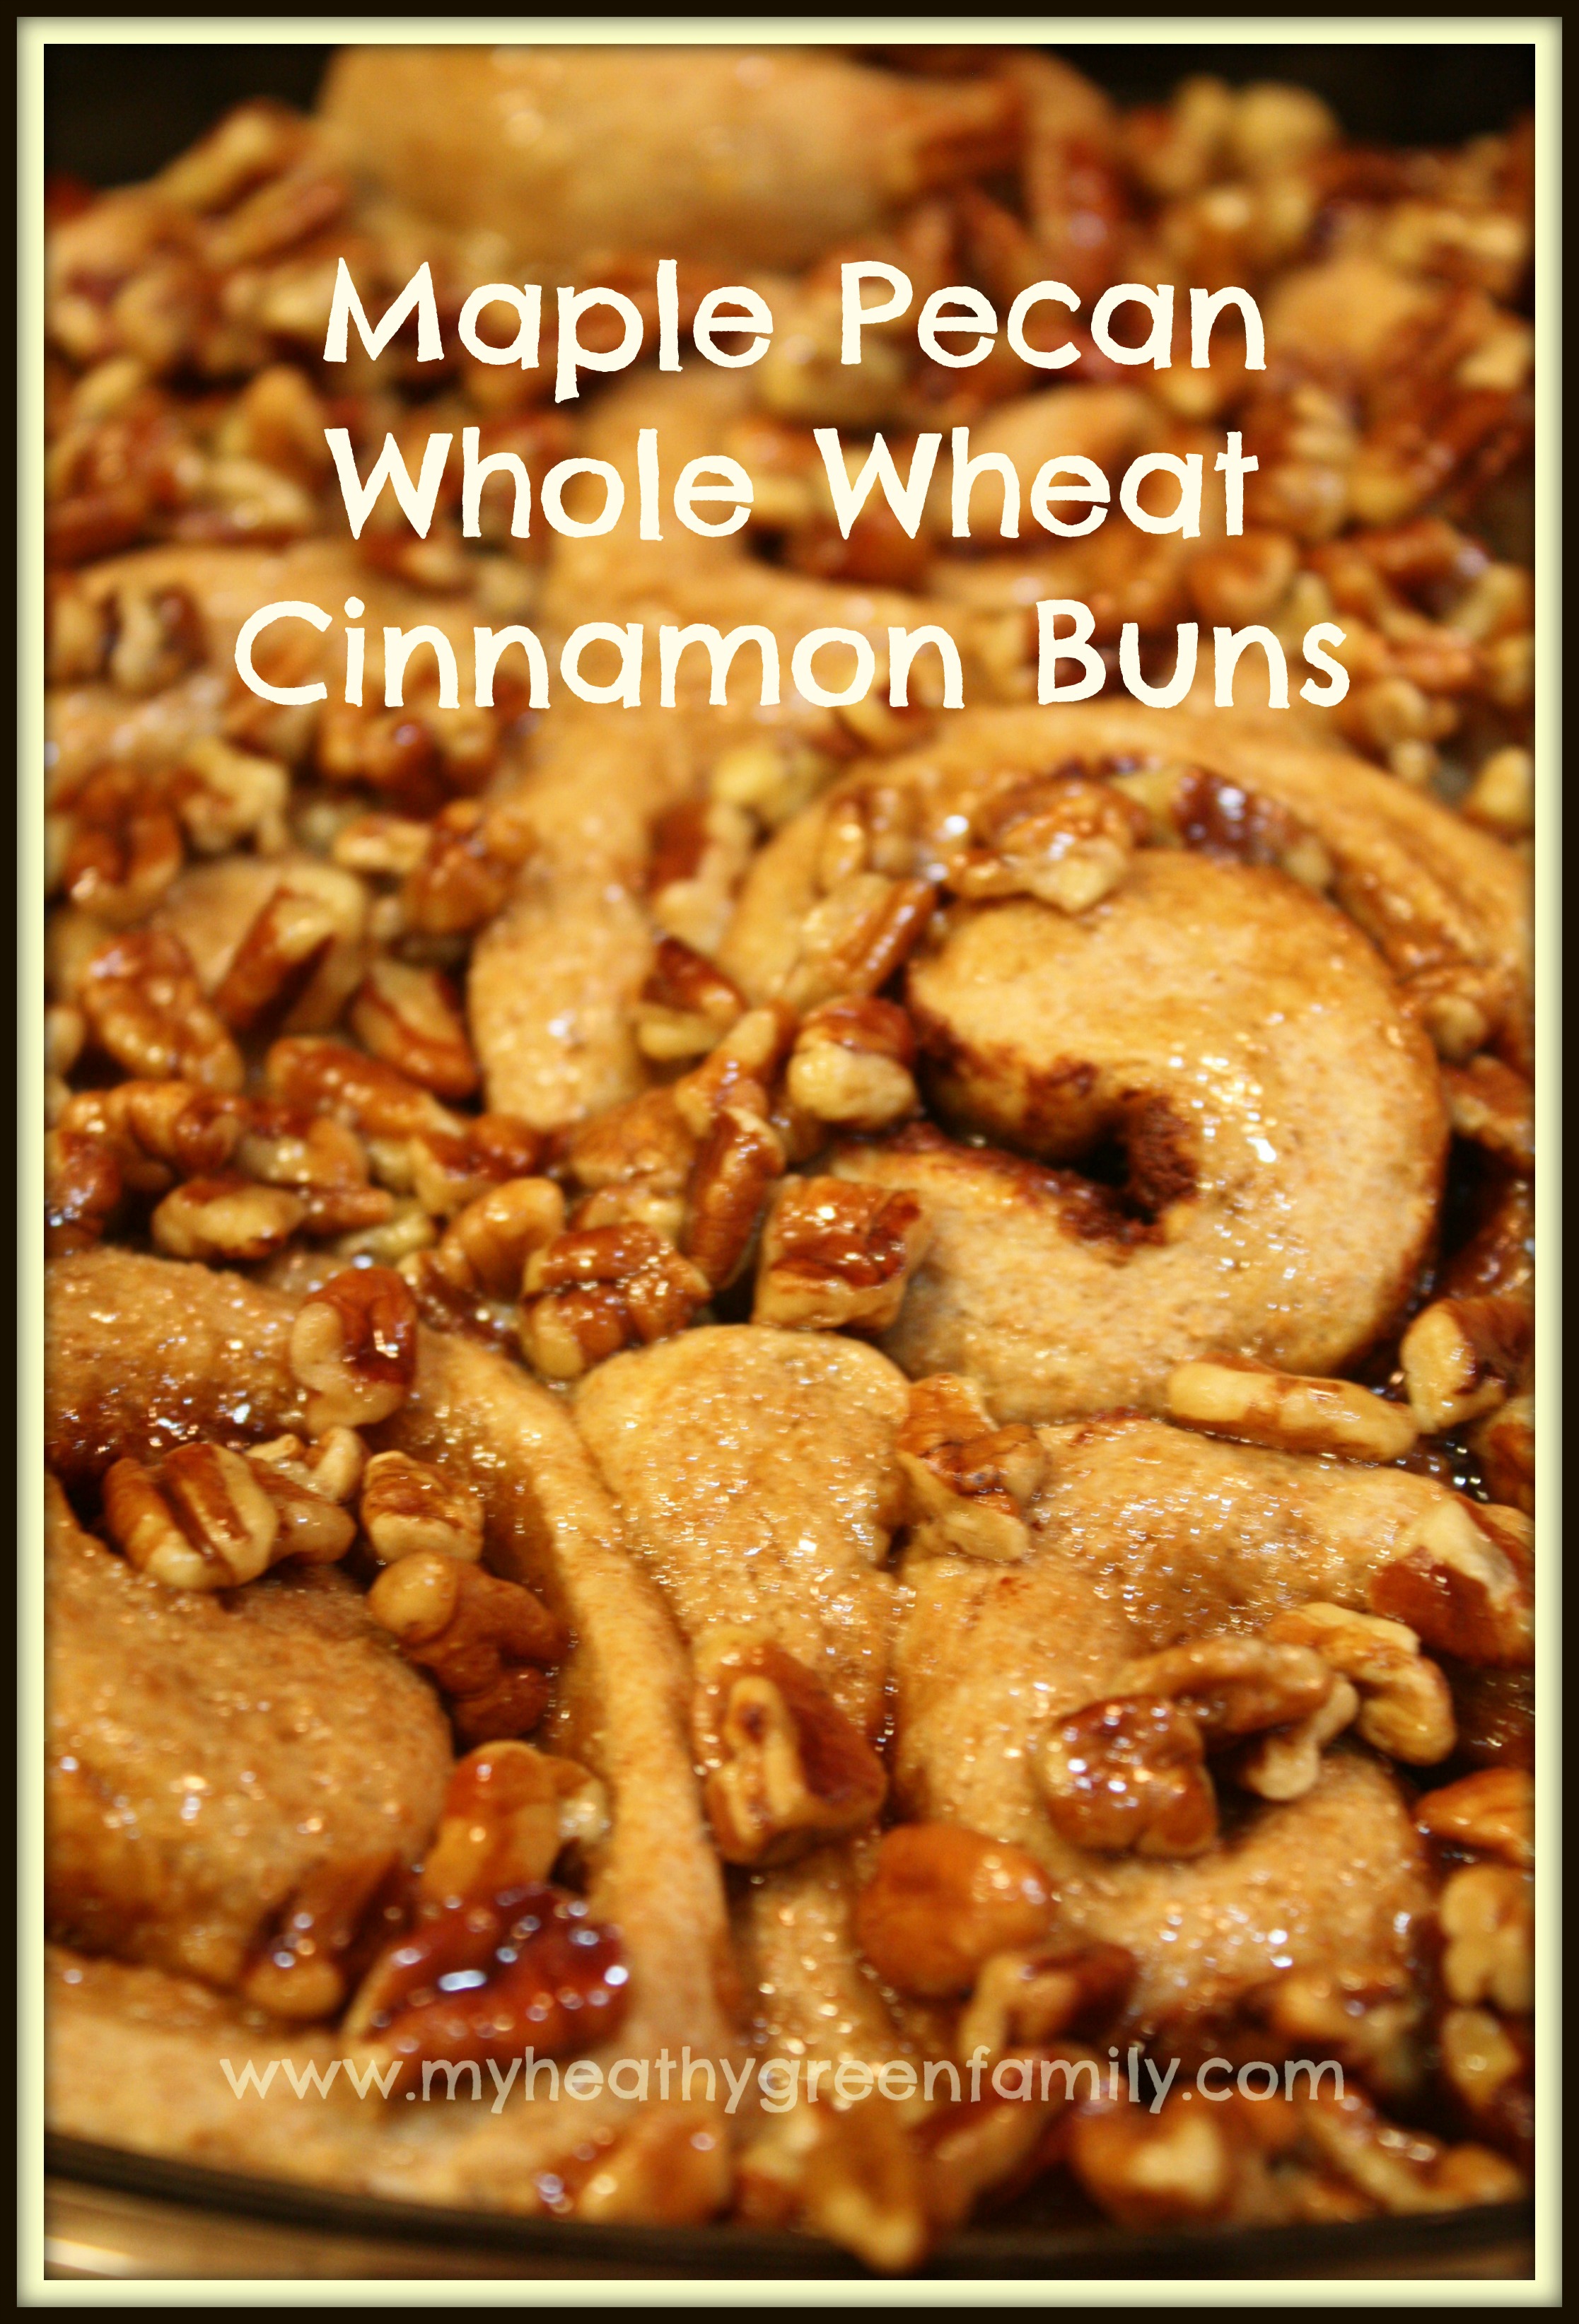 Maple Pecan Cinnamon Buns with 100% Whole Wheat Flour